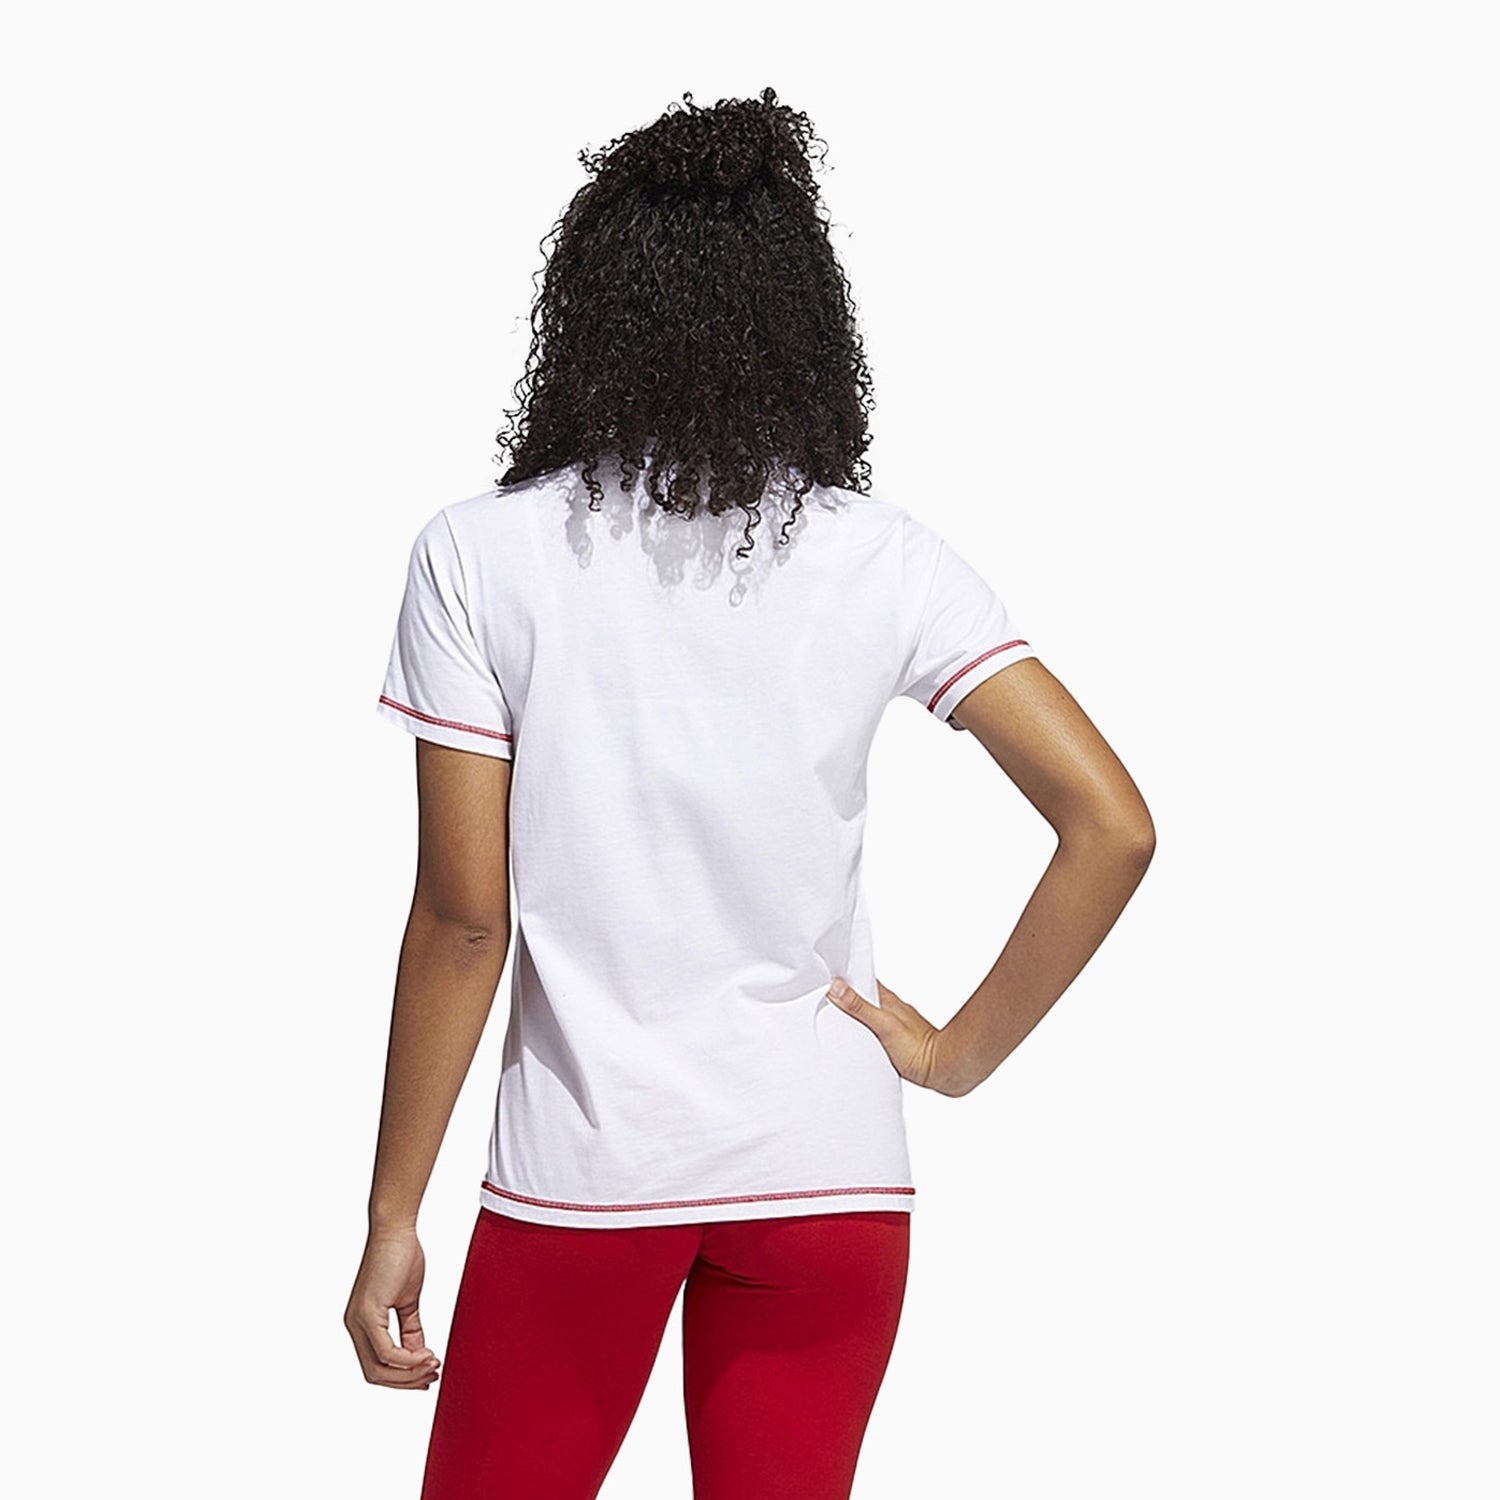 adidas-womens-americana-t-shirt-gk3638